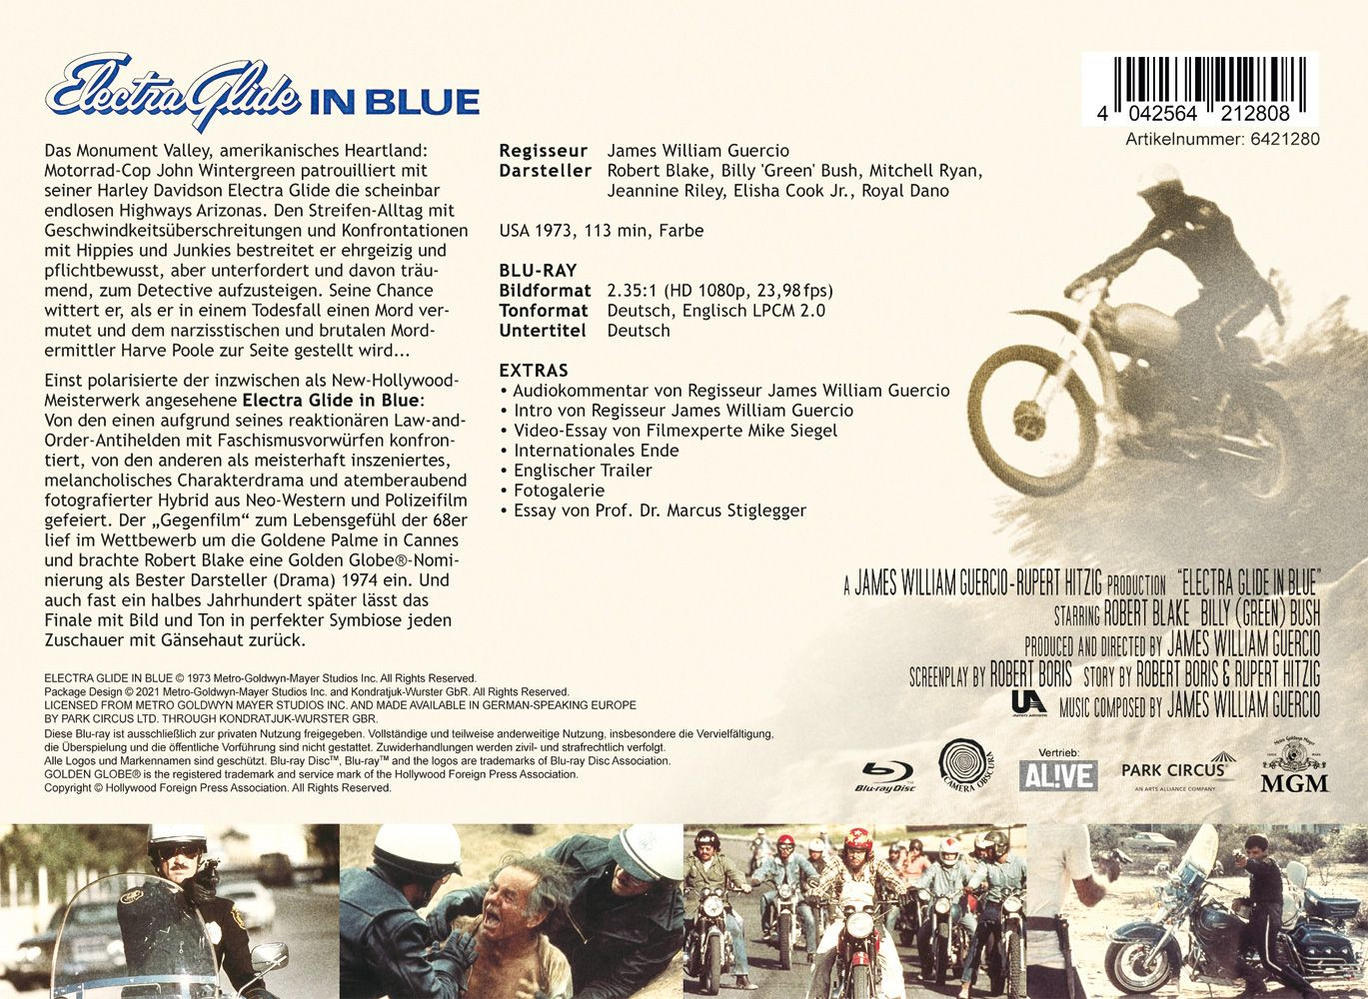 Electra Glide in Davidson Blue Harley 344 - Blu-ray